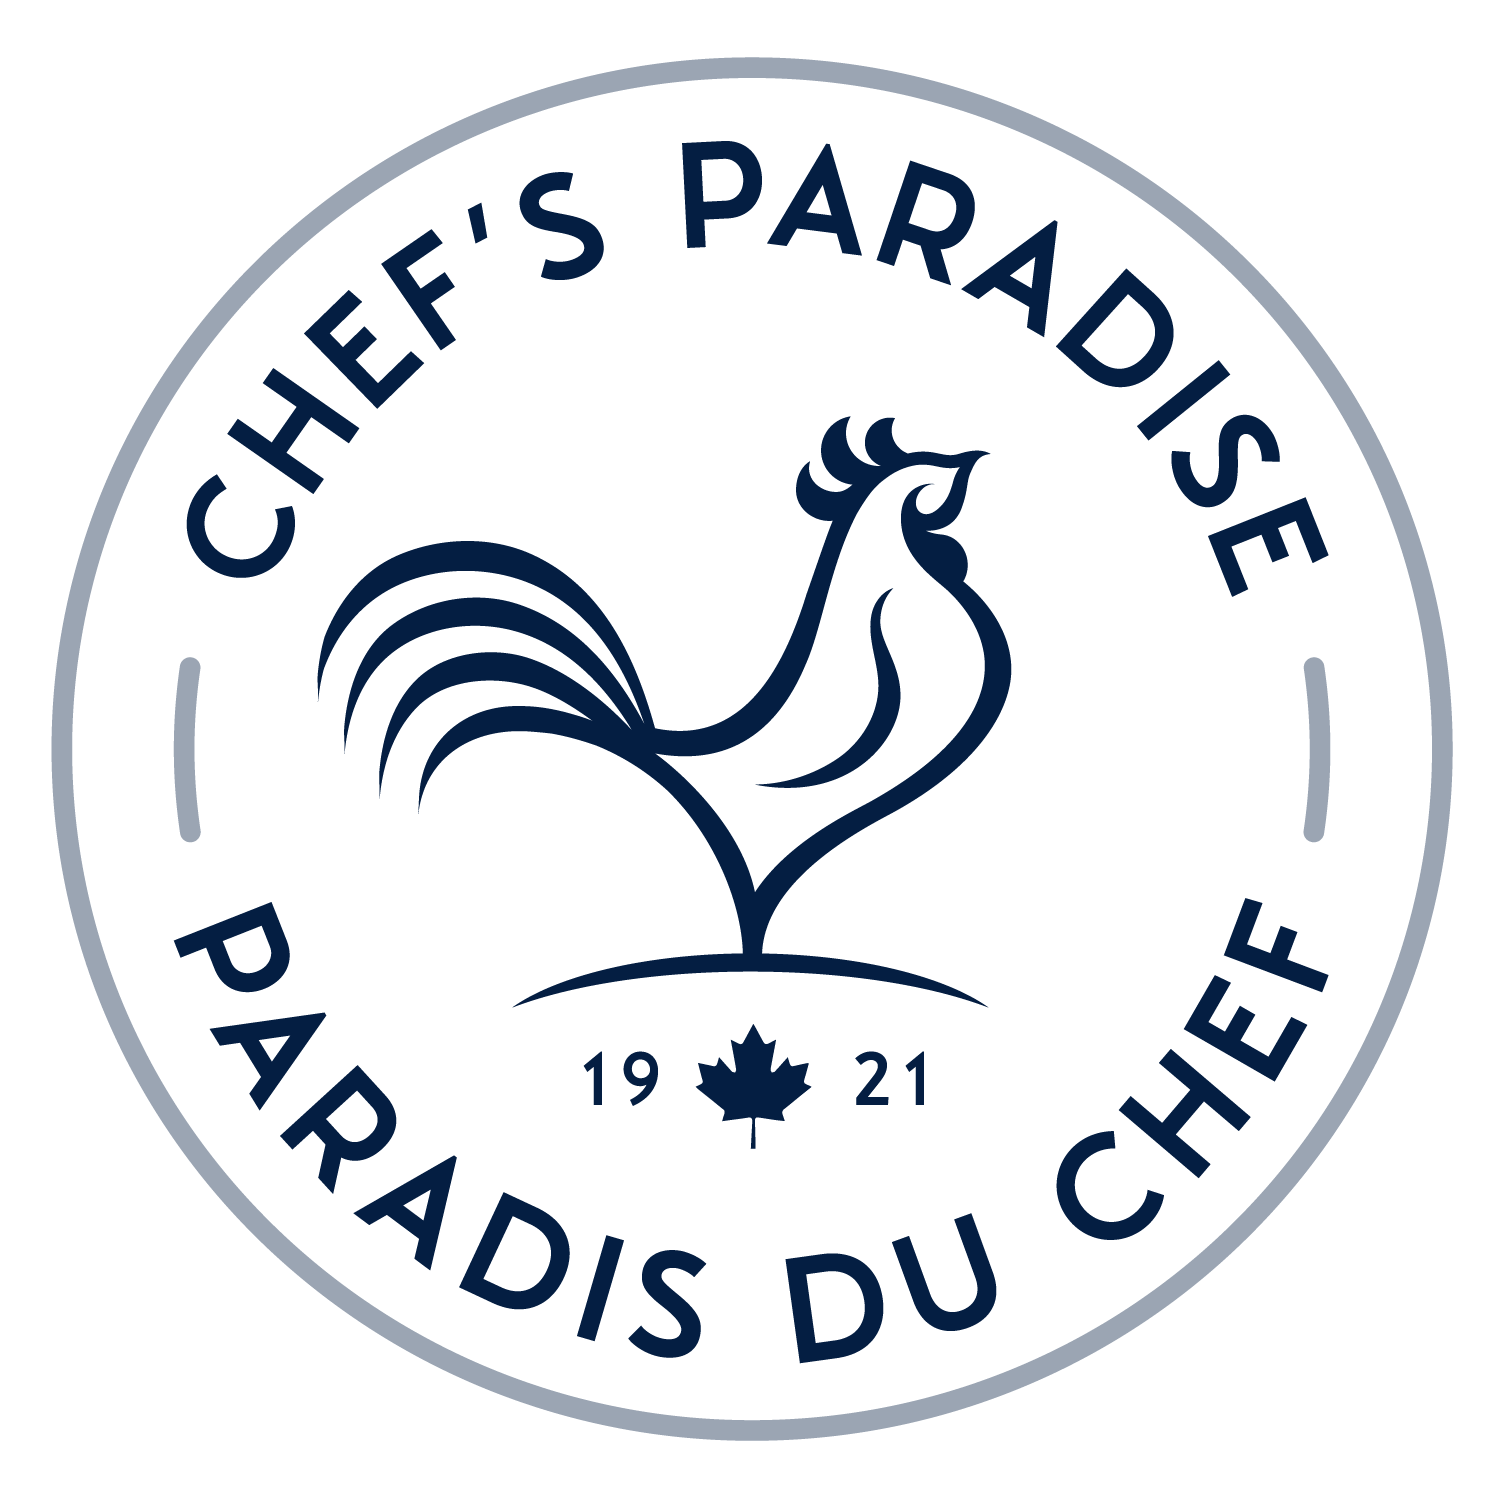 Chef's Paradise